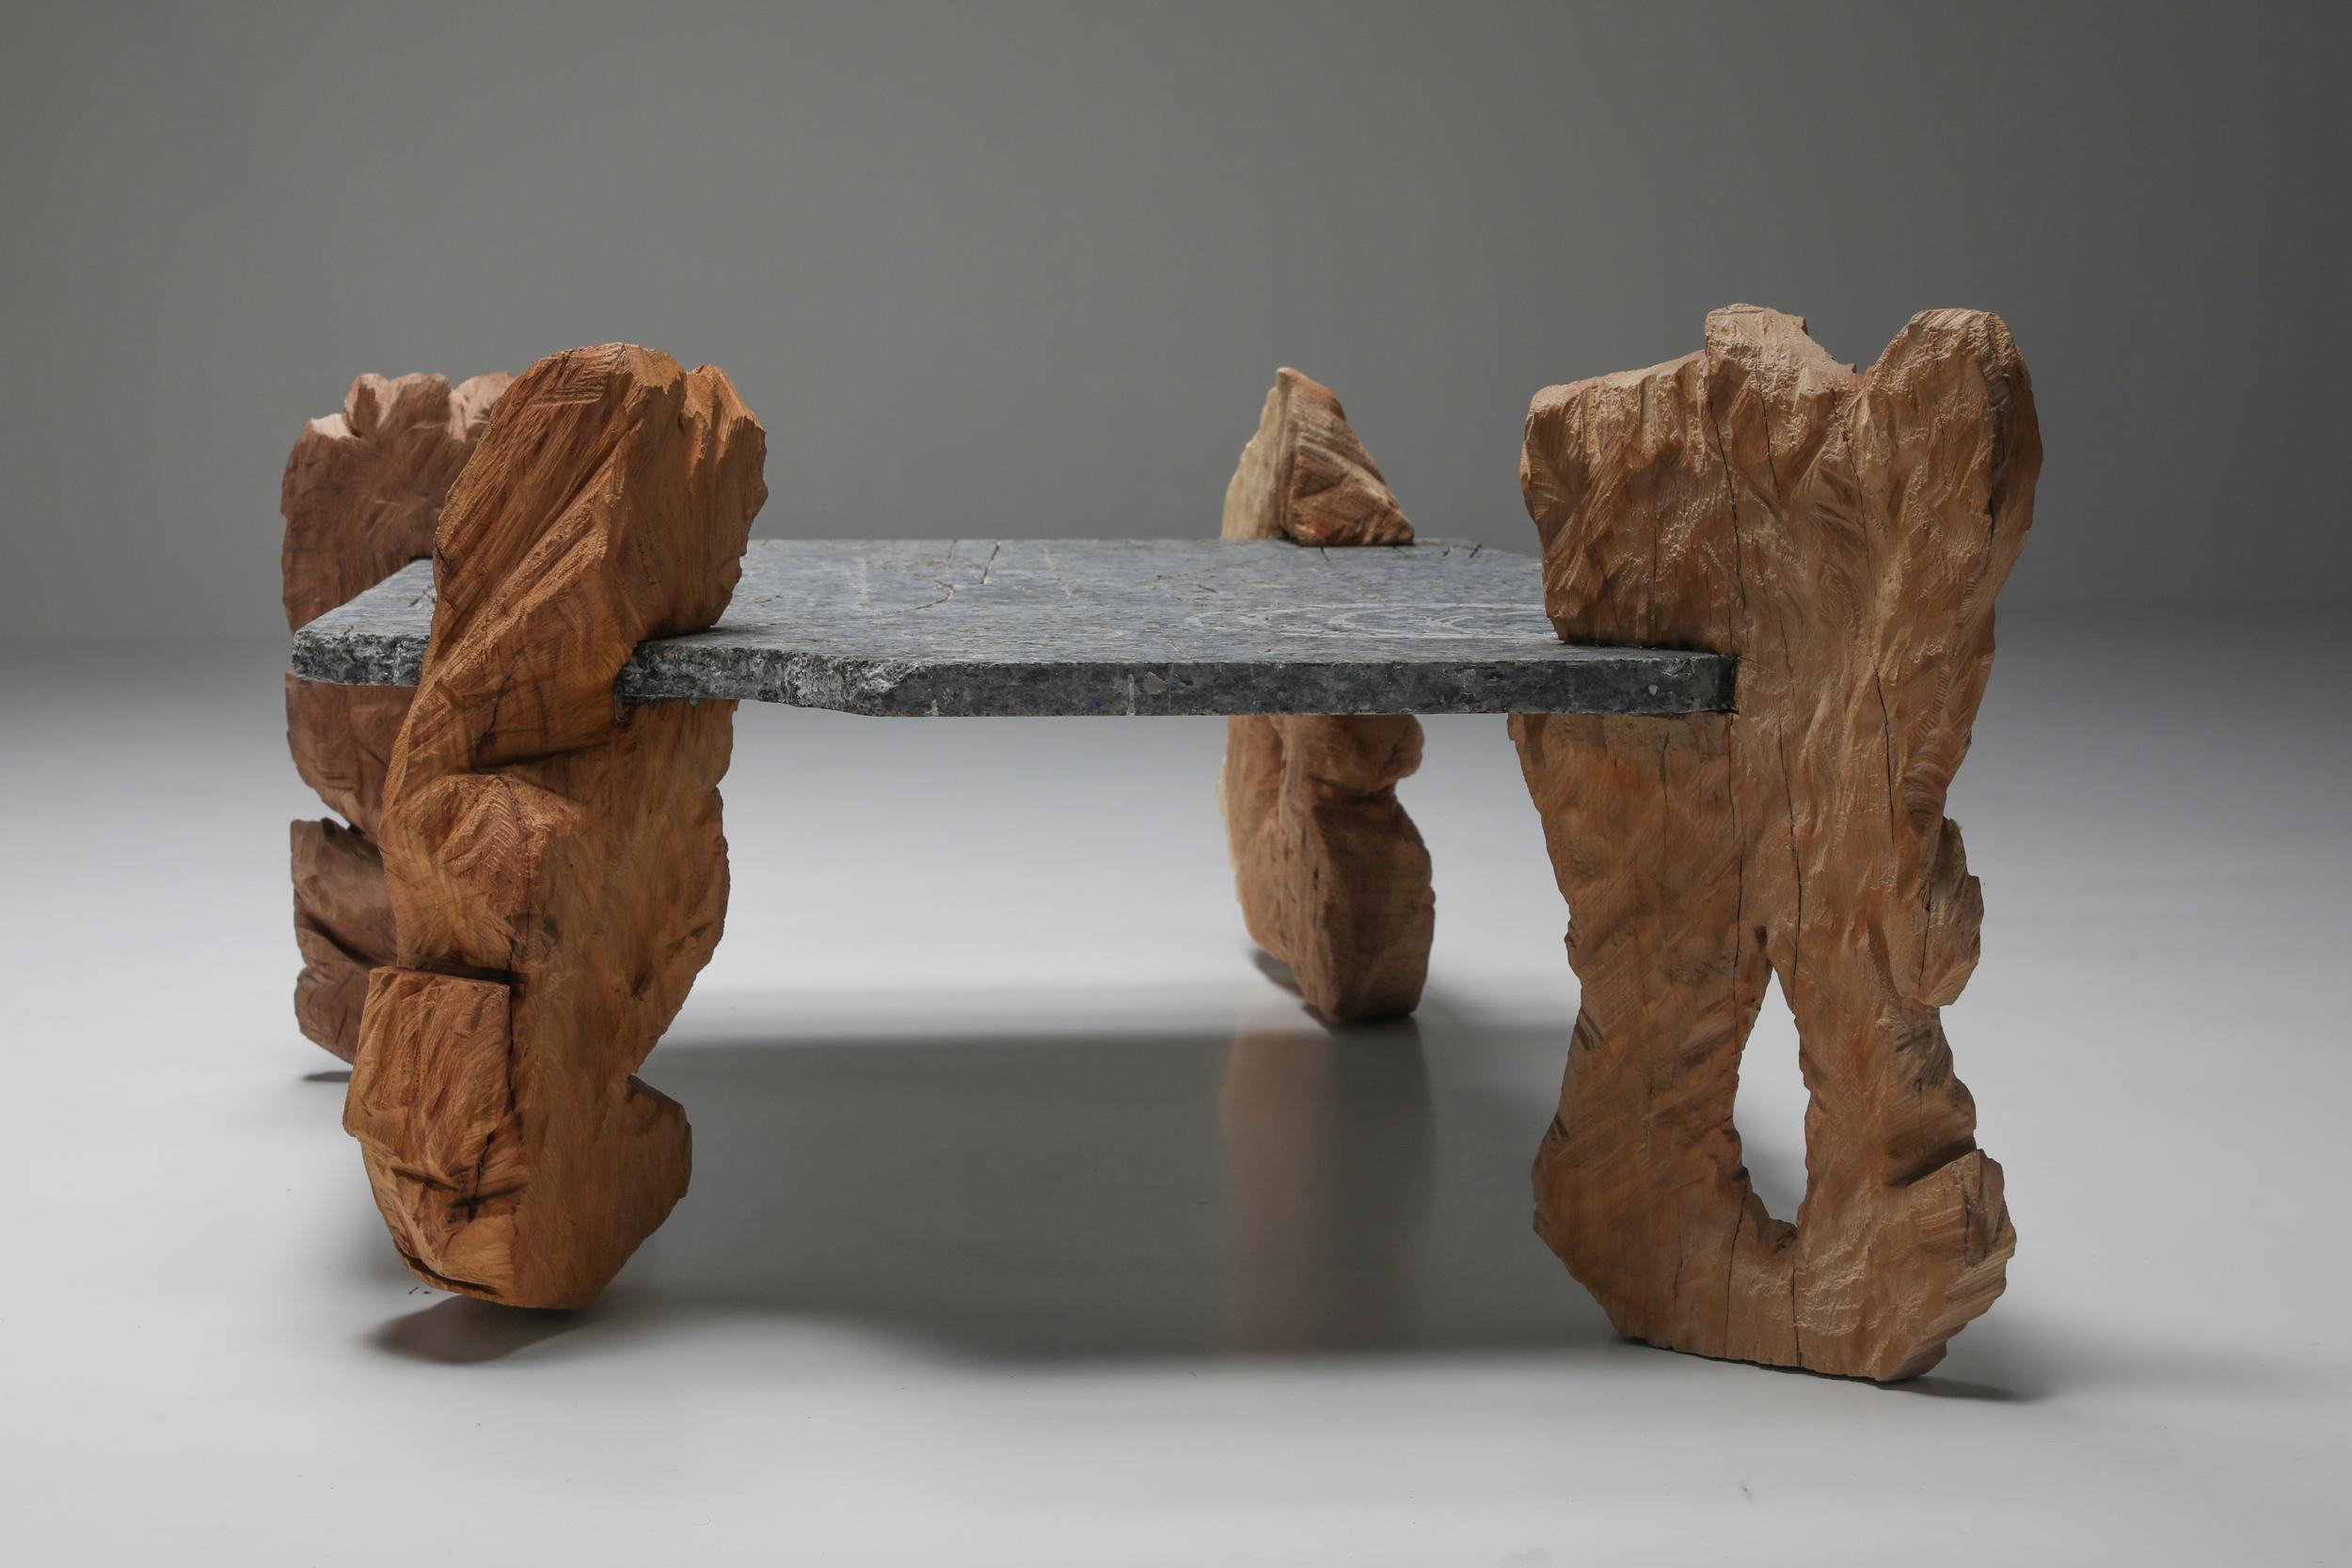 Organic Modern Contemporary Coffee Table Lionel Jadot 'Big Bear Grinder' Belgian Art and Design